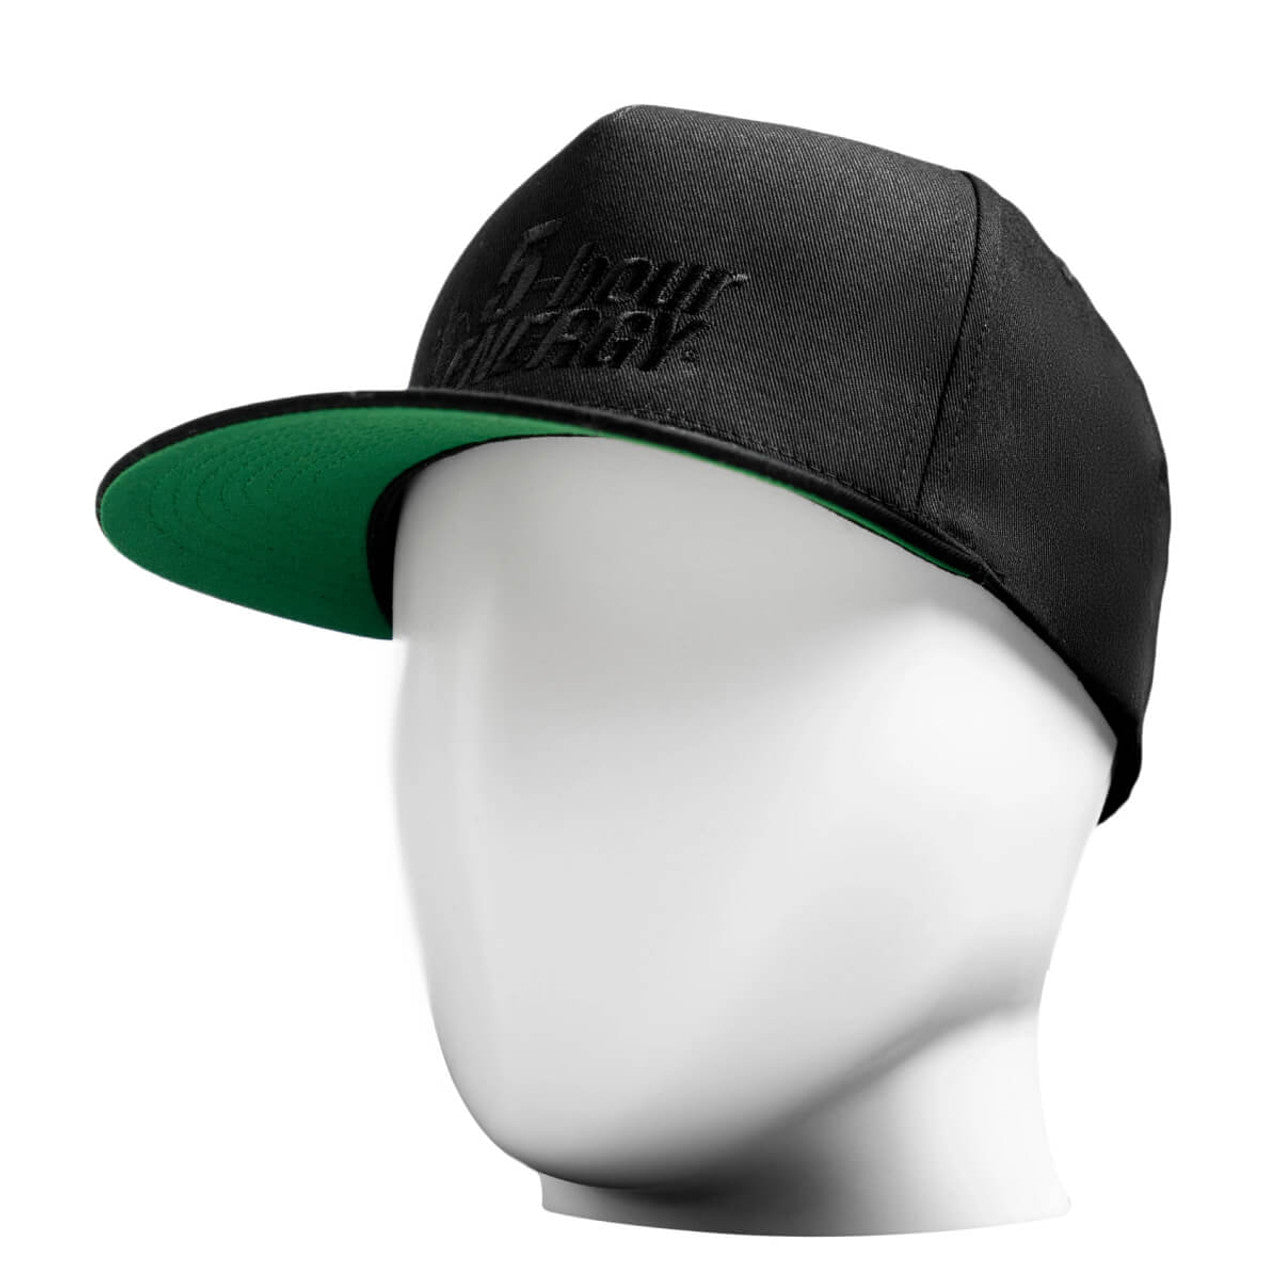 5-hour ENERGY Black Baseball Cap with Black Logo